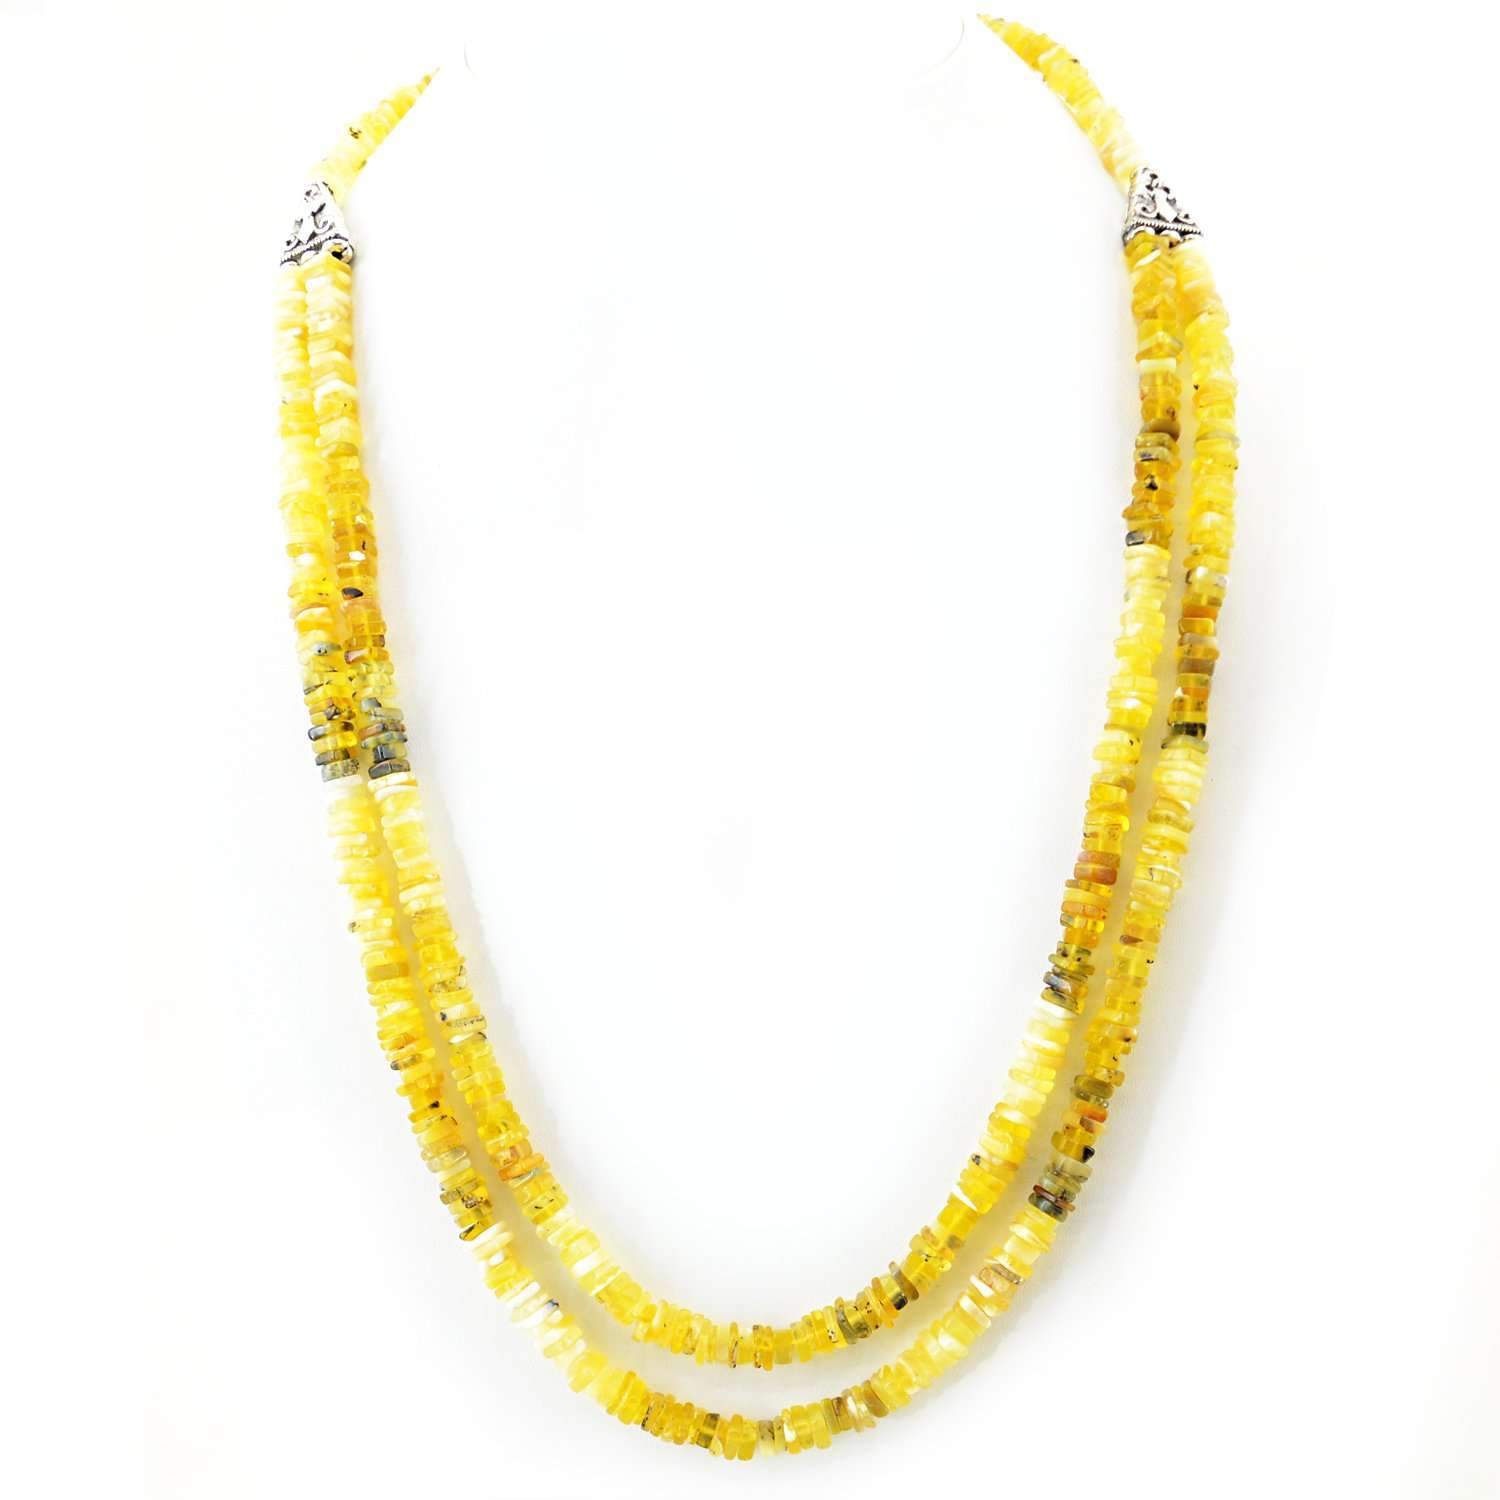 gemsmore:Peruvian Opal Necklace Natural 2 Strand Genuine Beads - Best Quality